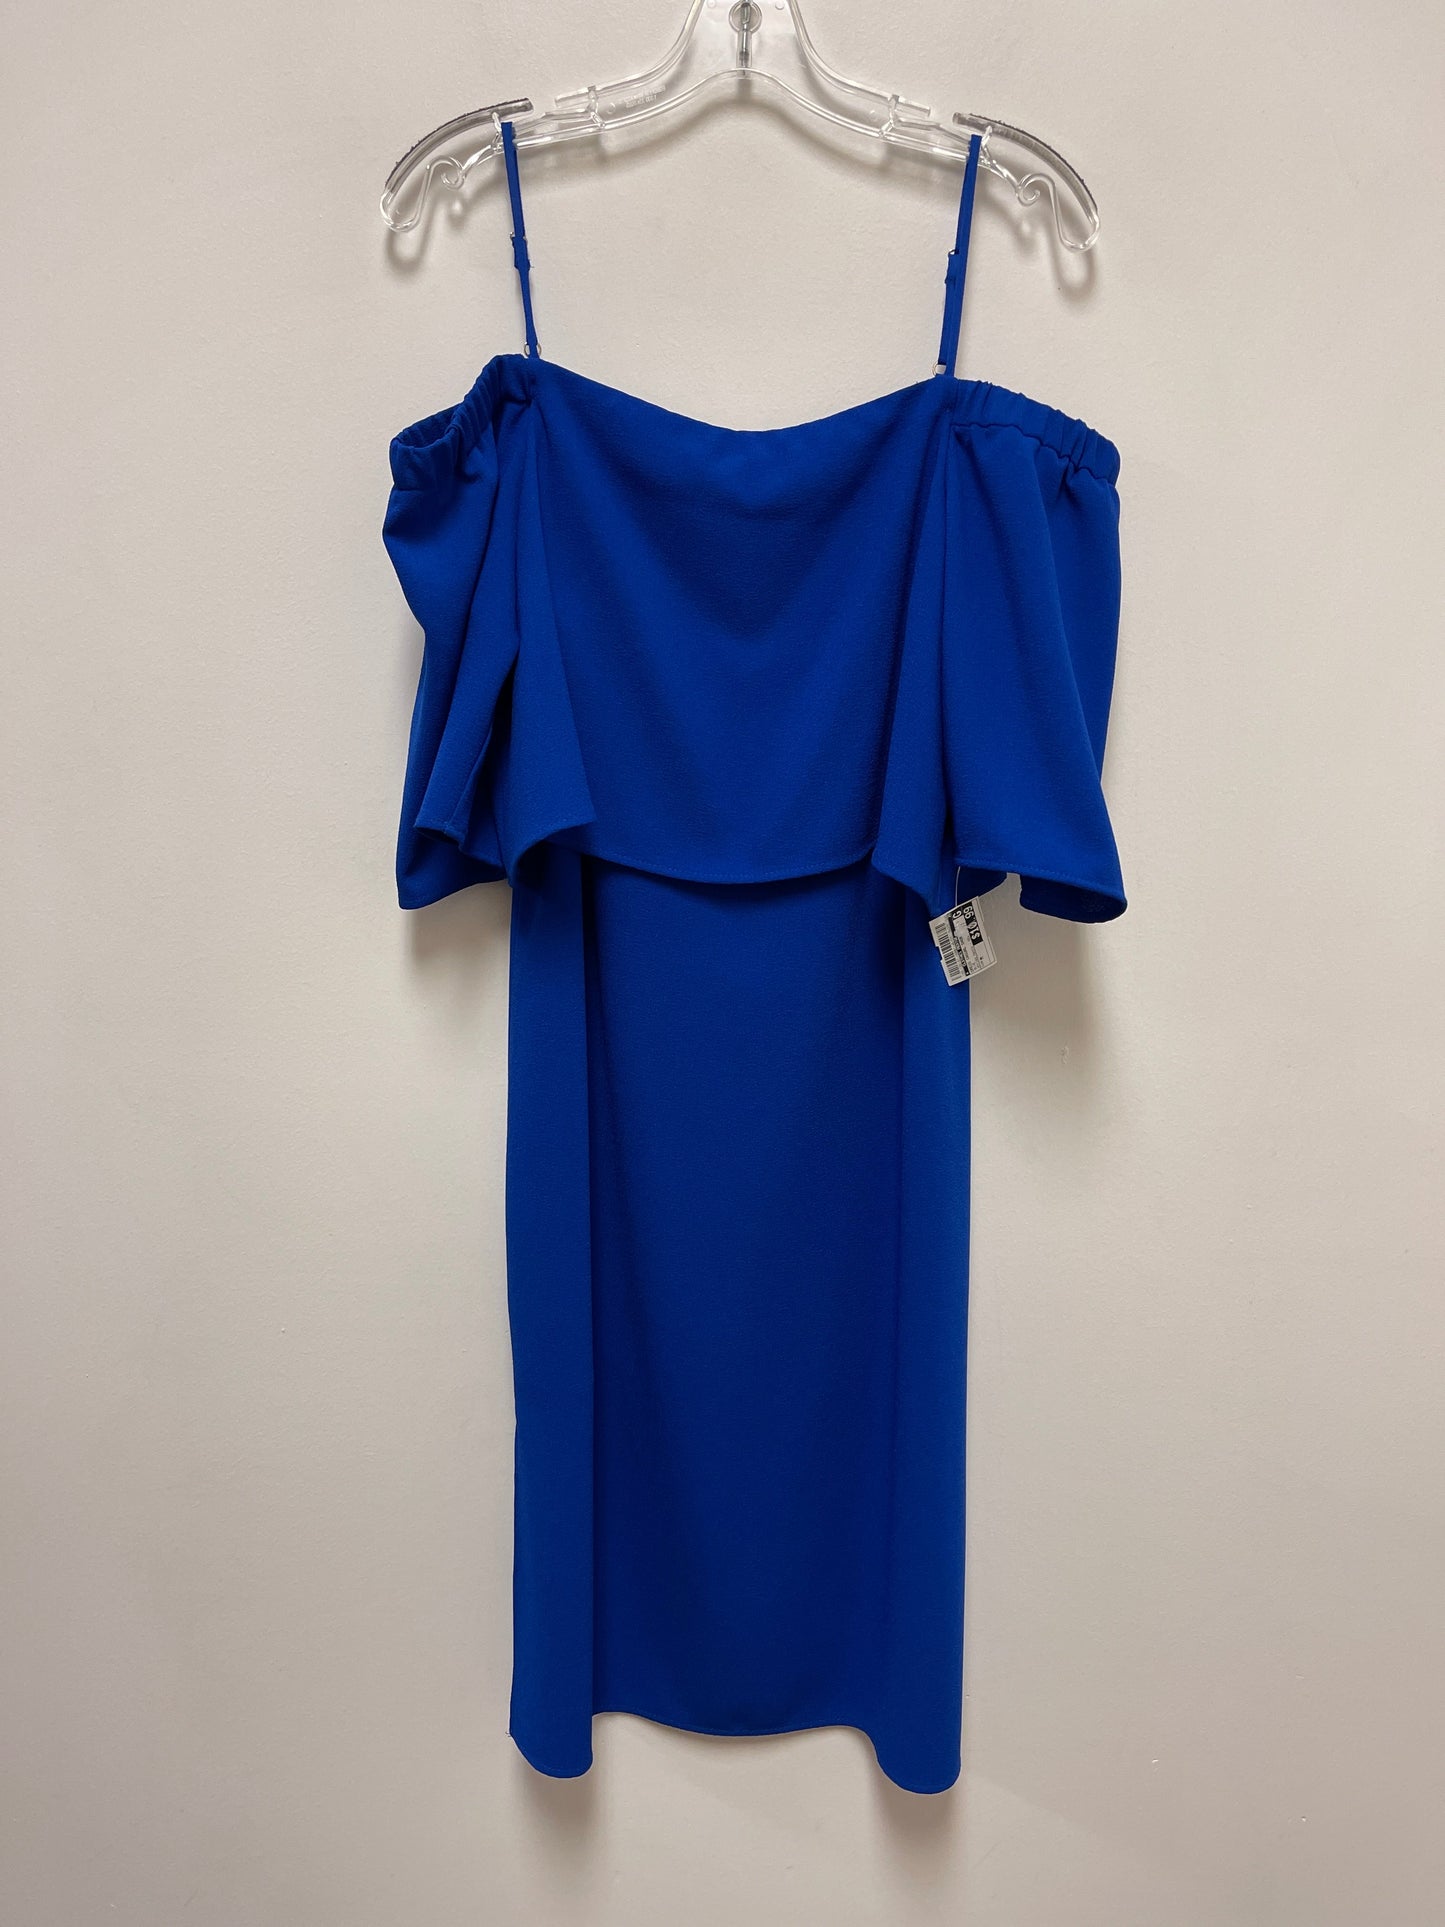 Blue Dress Casual Short Clothes Mentor, Size M